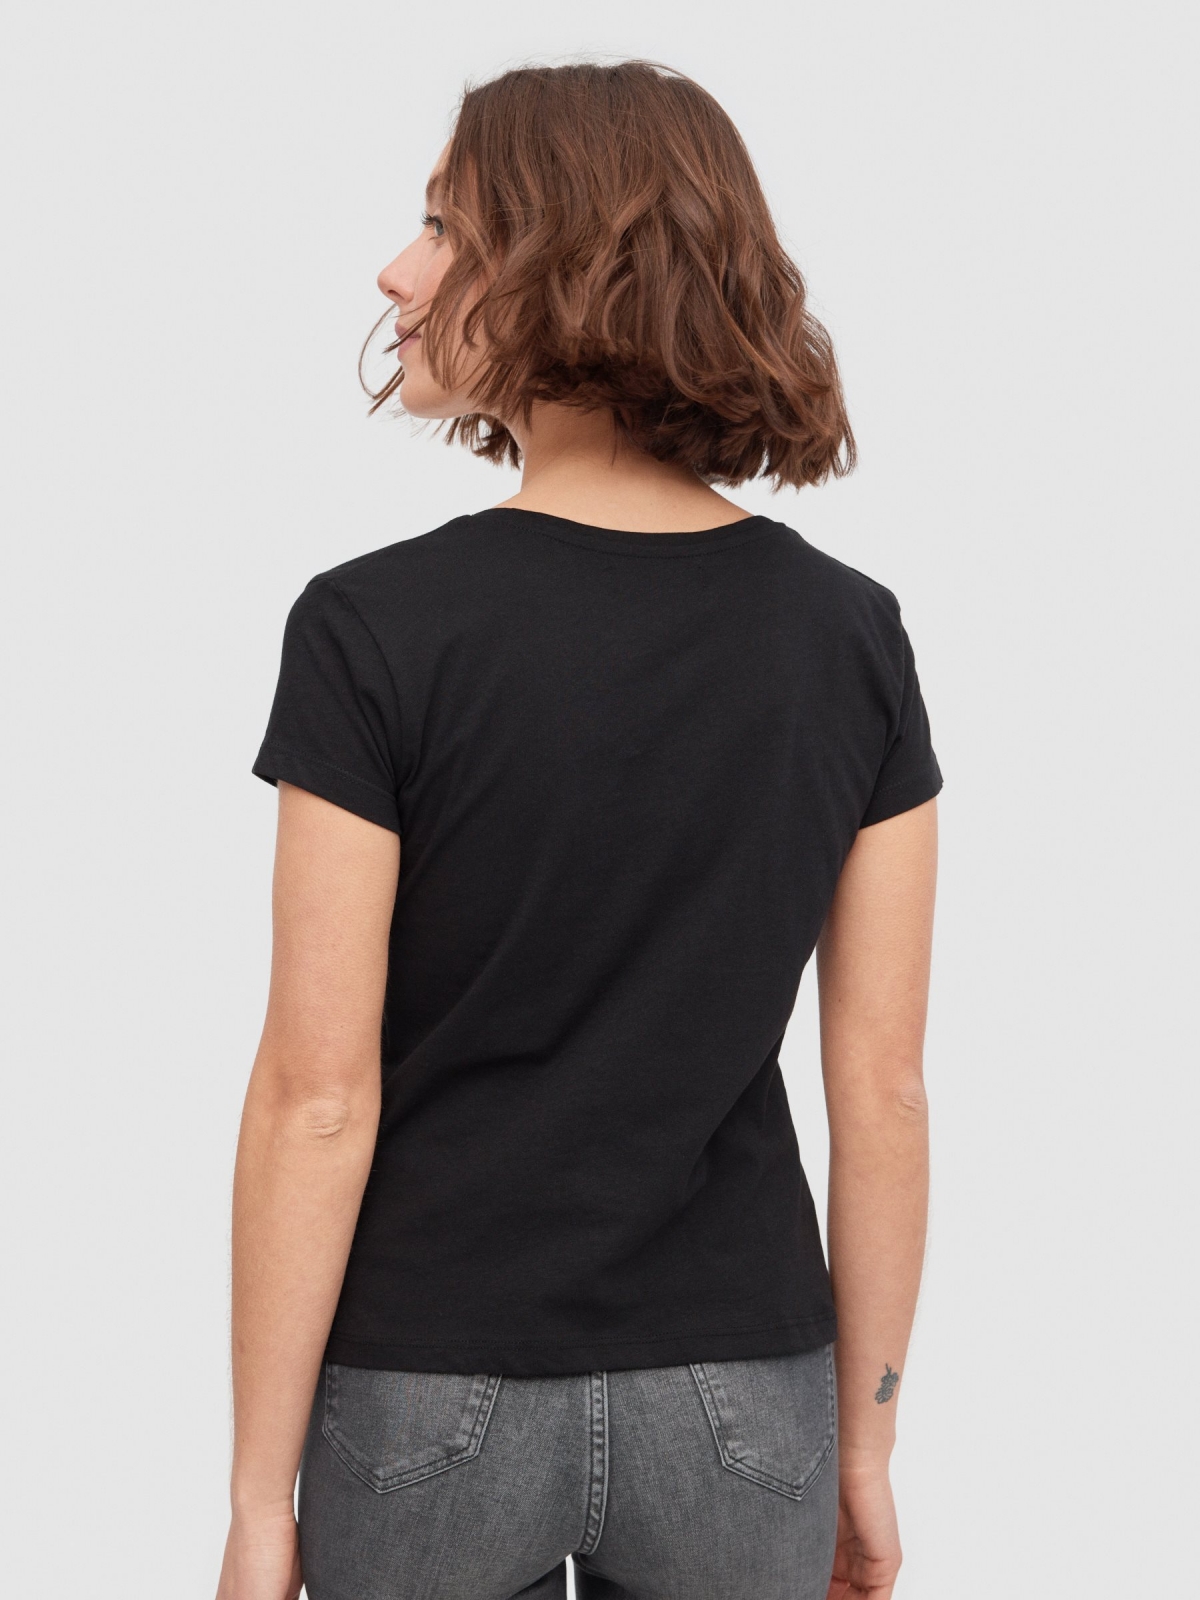 Camiseta crop Mariposa negro vista media trasera